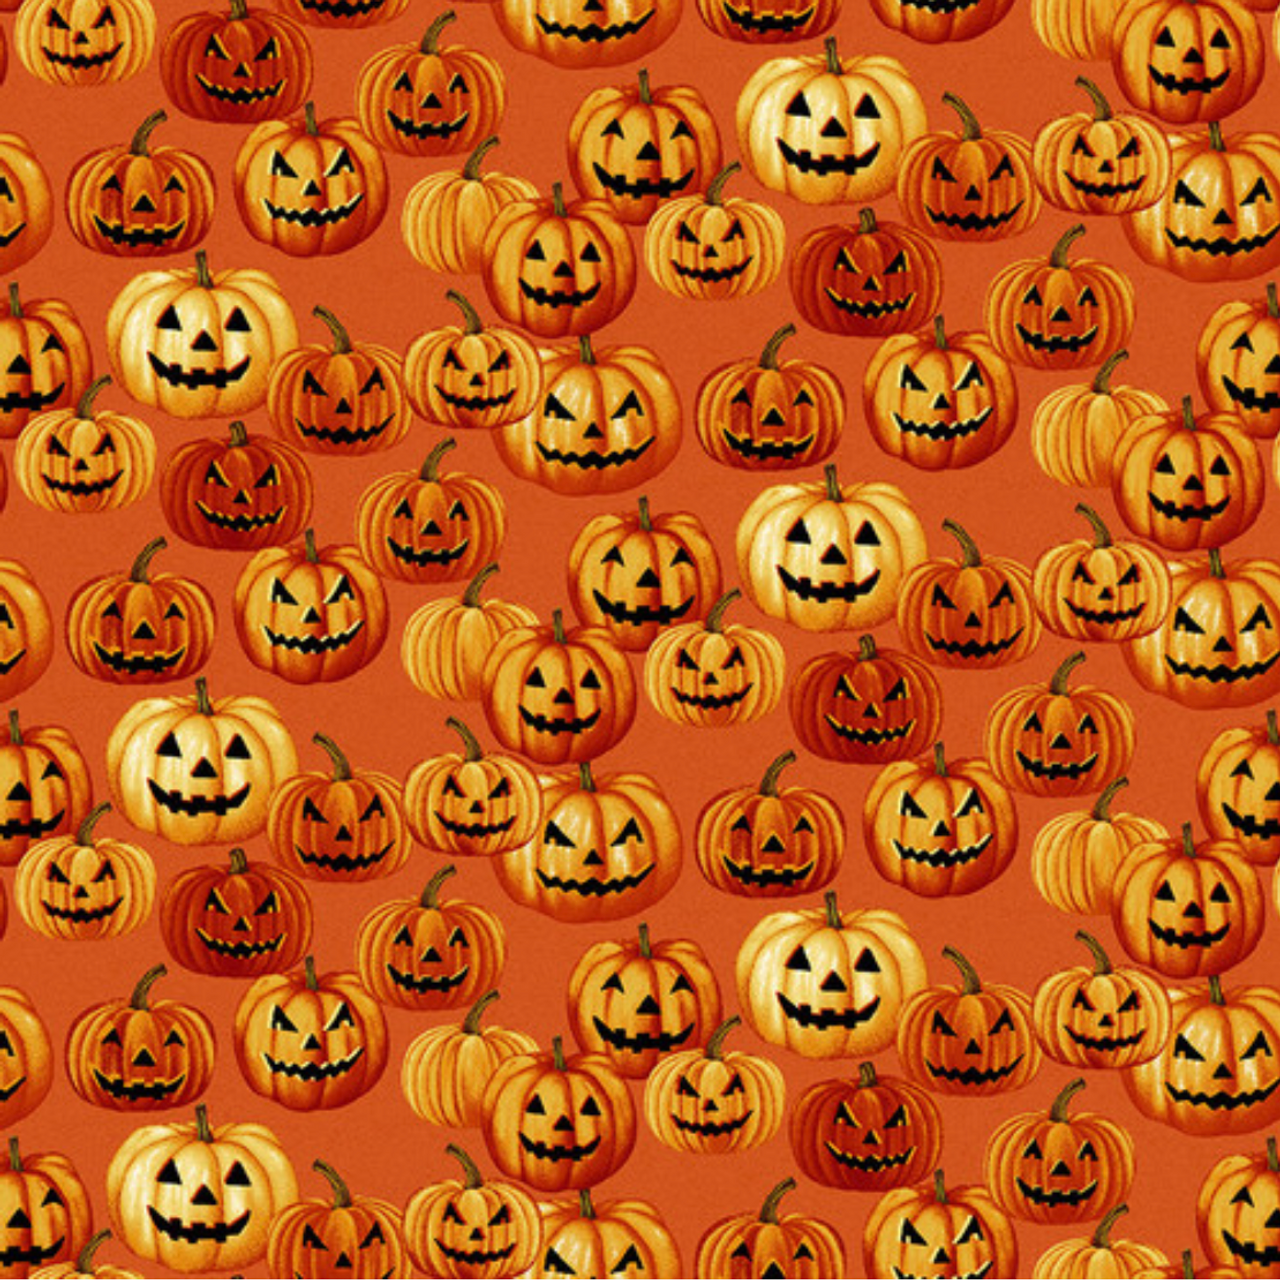 Henry Glass Haunted Village Jack-O-Lantern Pumpkin Fabric by The Yard